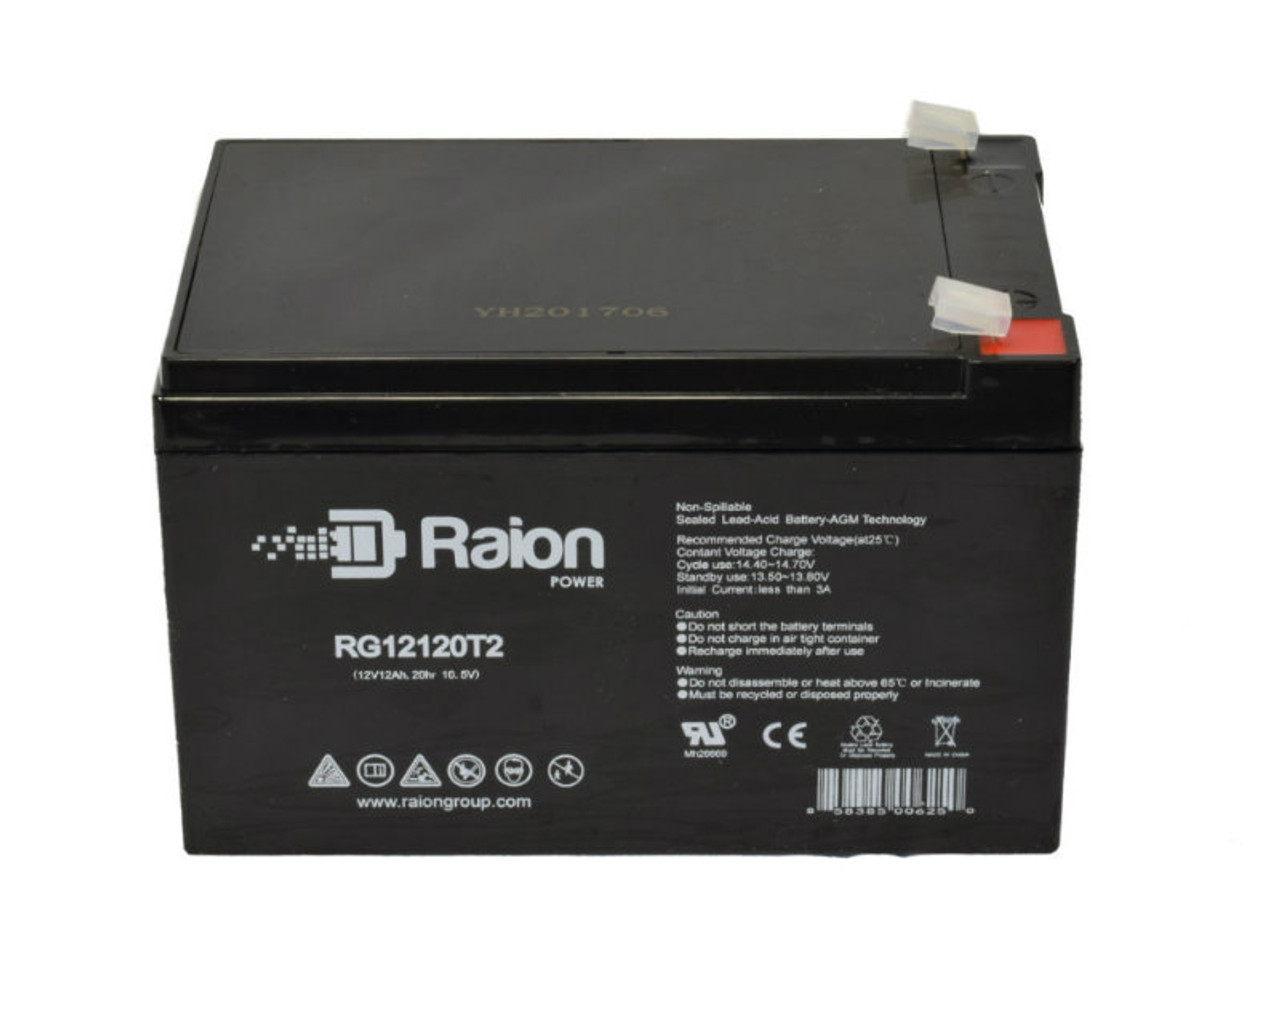 Raion Power RG12120T2 Replacement Battery Cartridge for Powerware BAT-0496